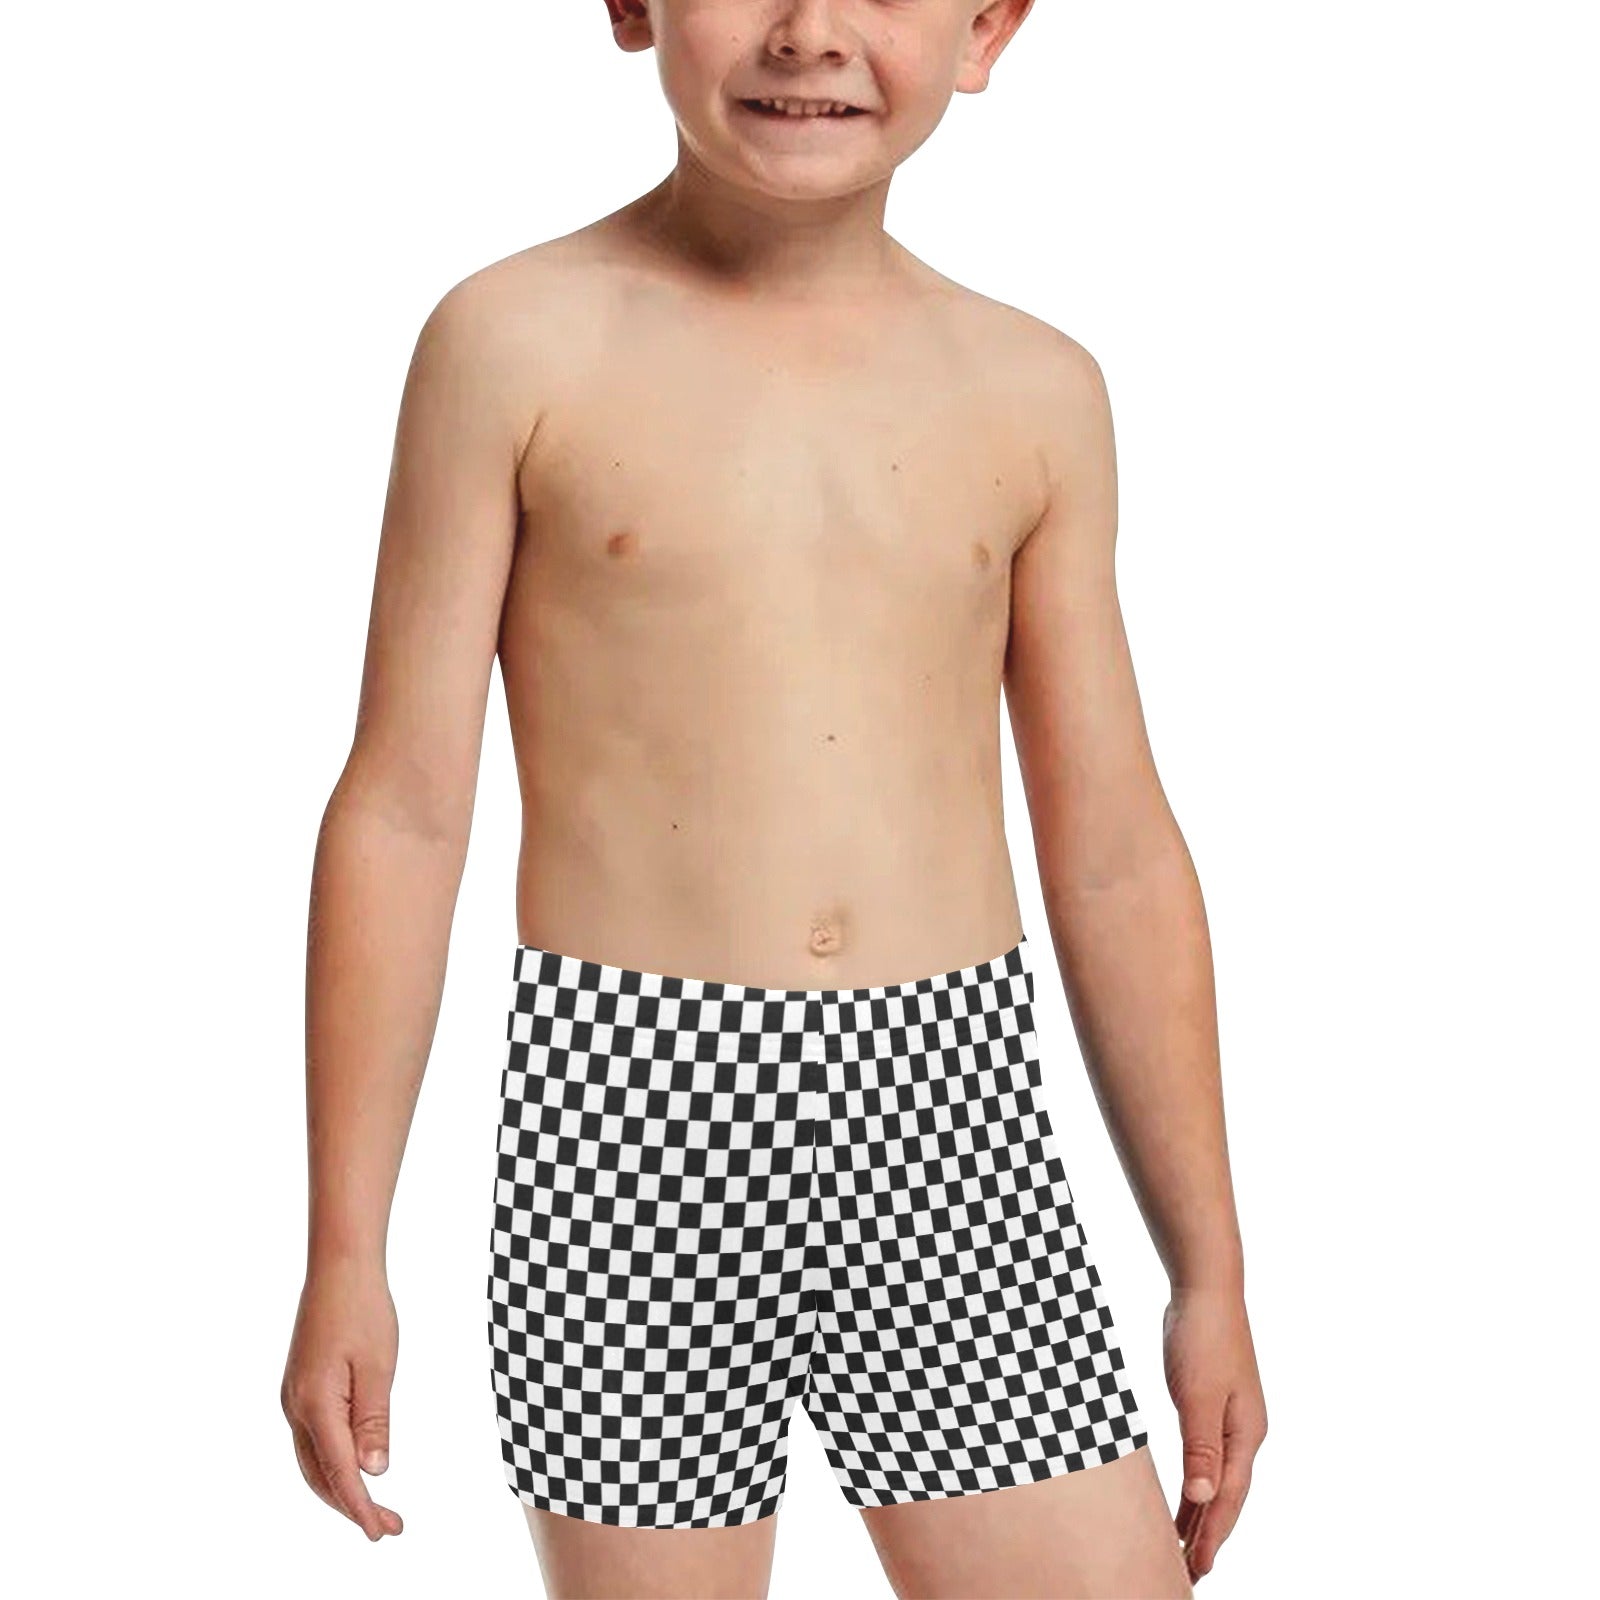 Checkered Boys Swim Trunks Shorts (2-7), Black White Bathing Suit Check Beach Swim Toddler Kids Inner Lining Drawstring Casual Swimsuit Starcove Fashion